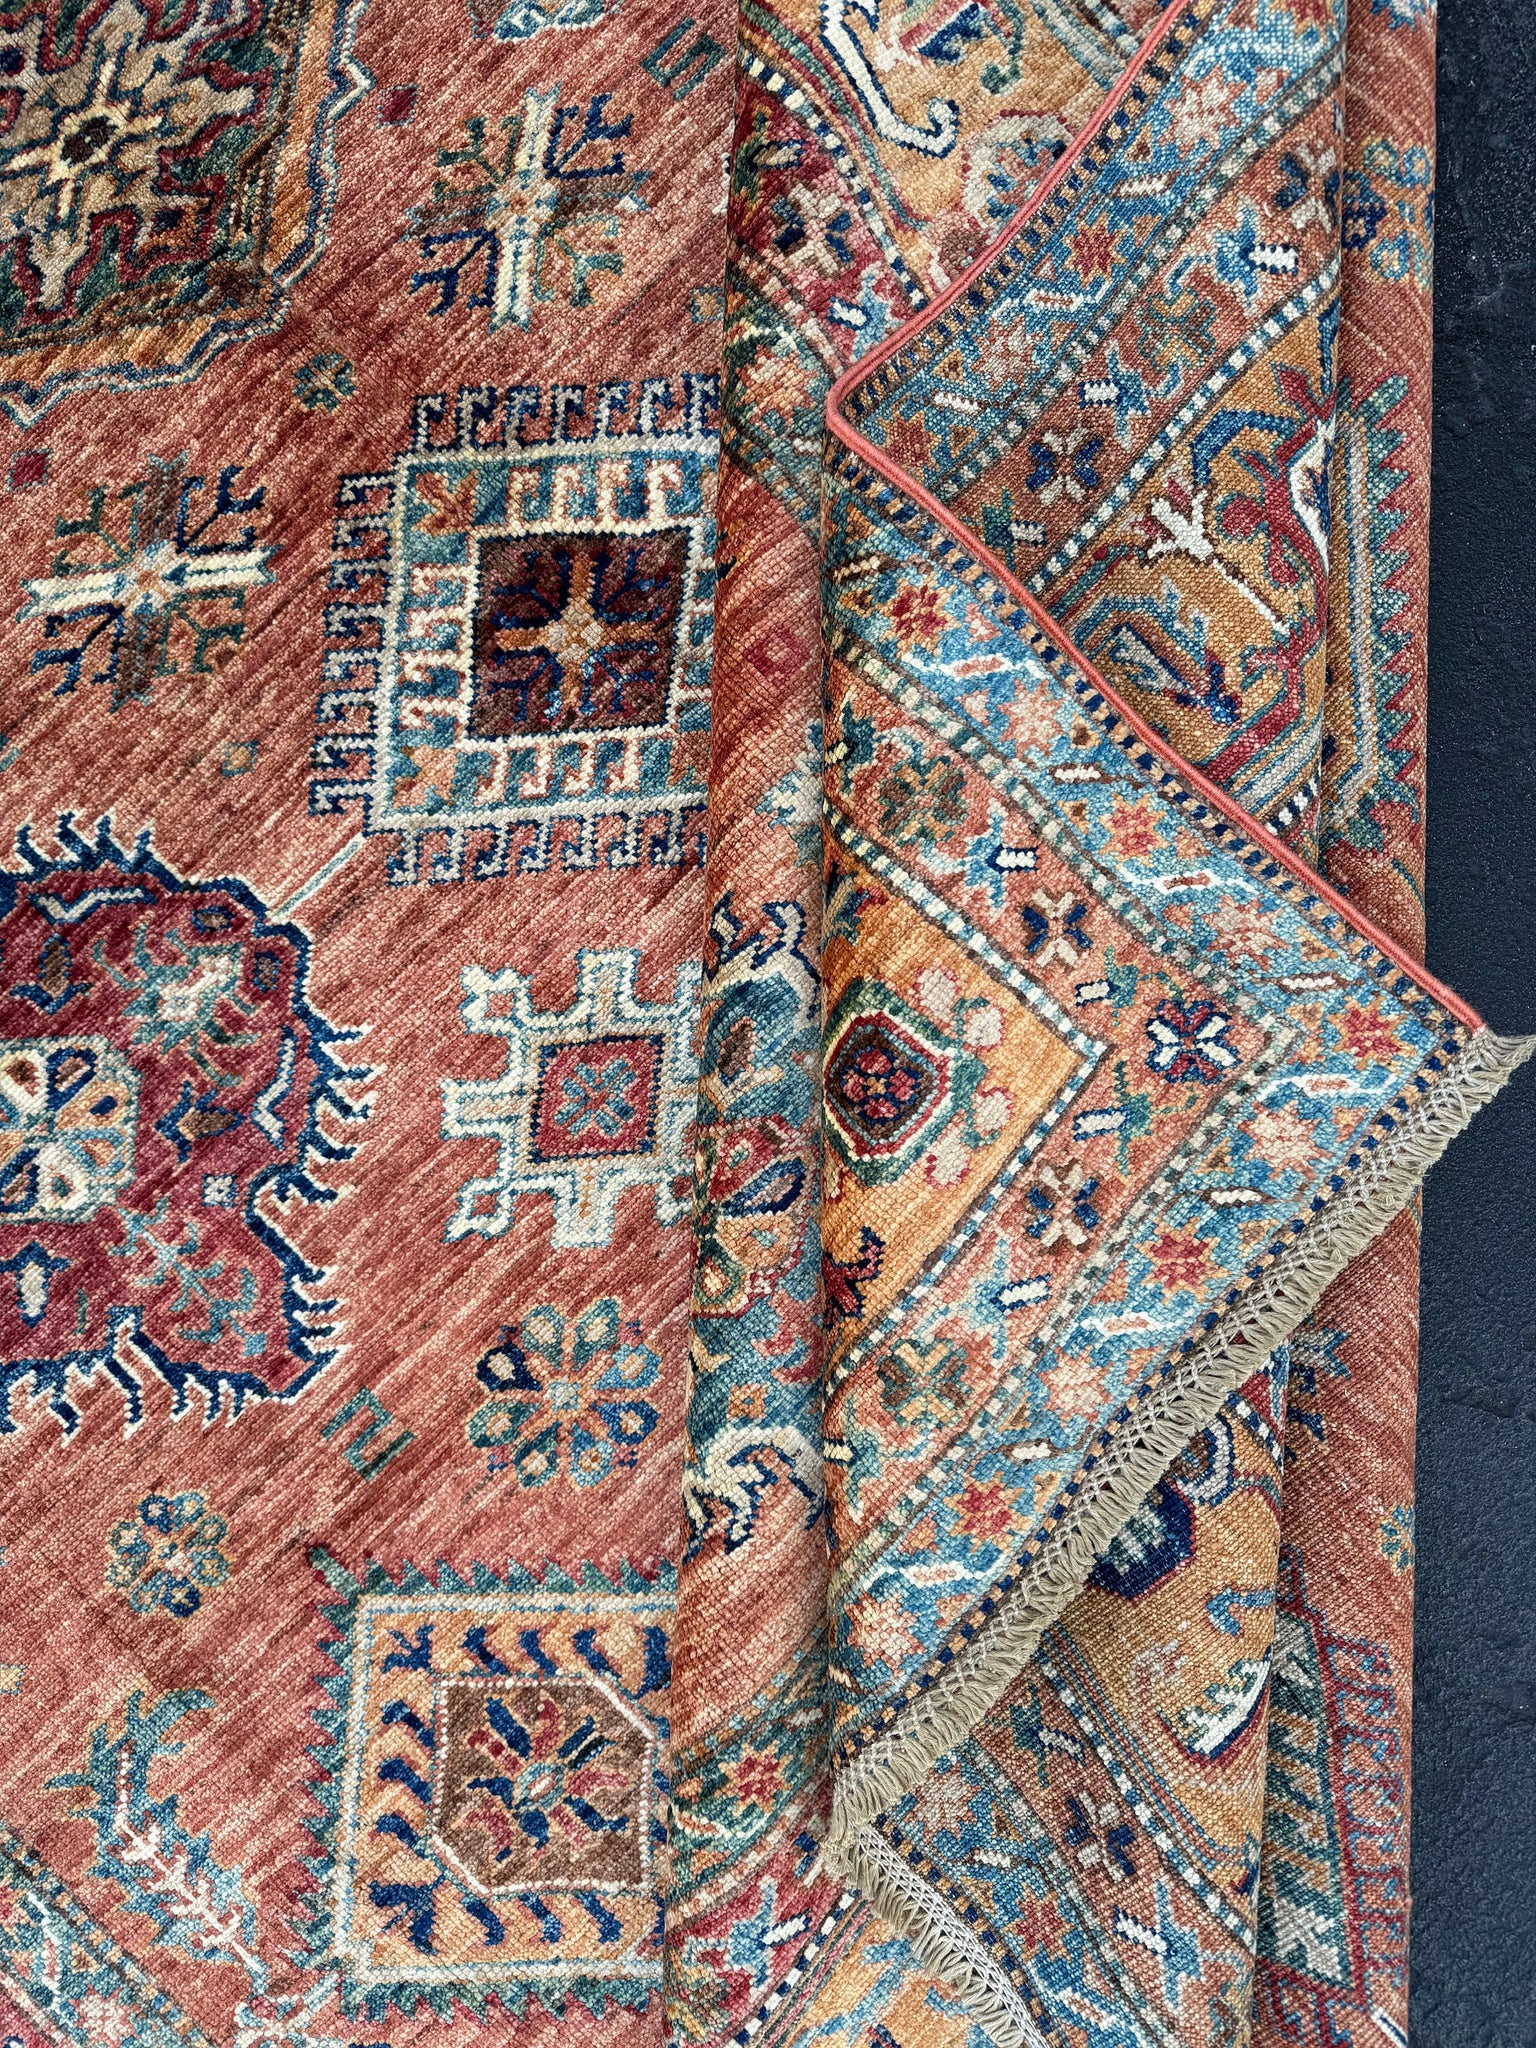 7x10 - 7x11 (215x305) Handmade Afghan Rug | Brick Red Honey Cream Turquoise Indigo Sky Blue Denim Blue Auburn | Wool Earth Tones Medallions